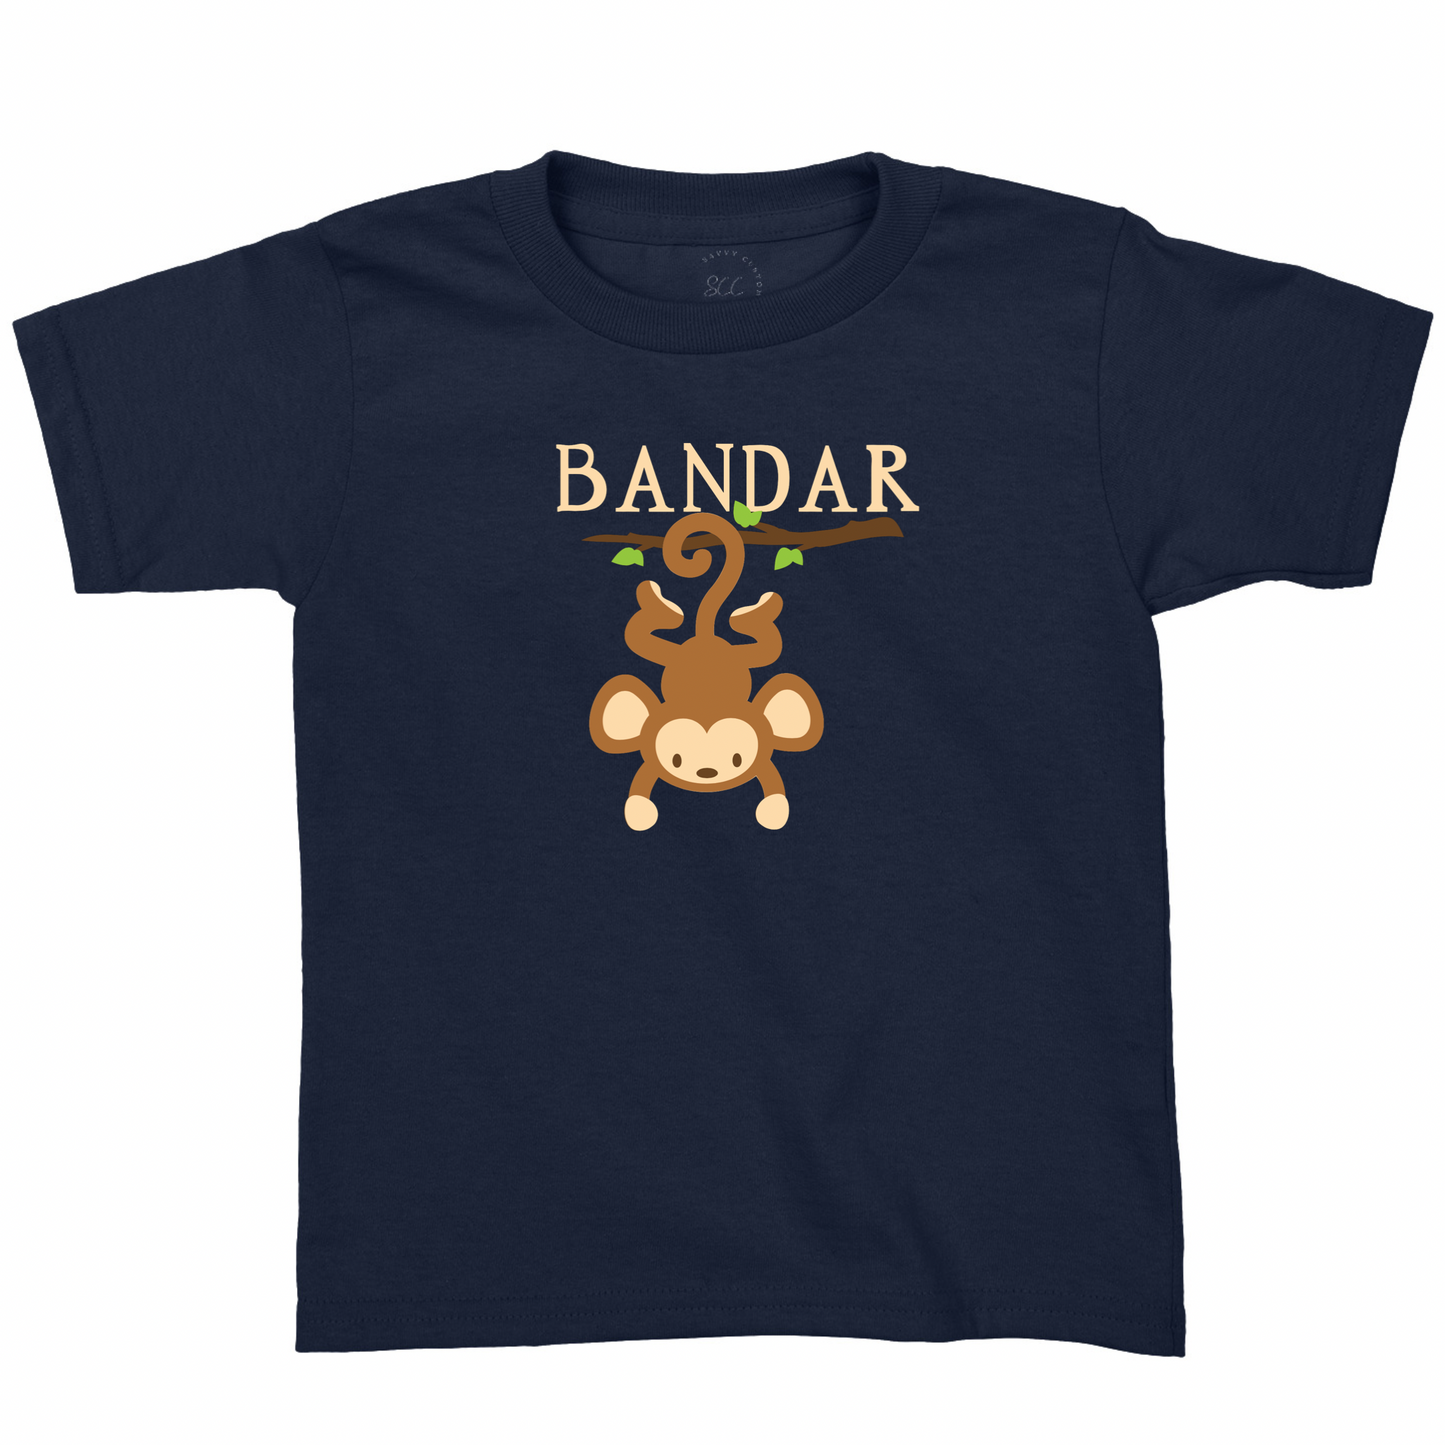 BANDAR - Kids T-Shirt